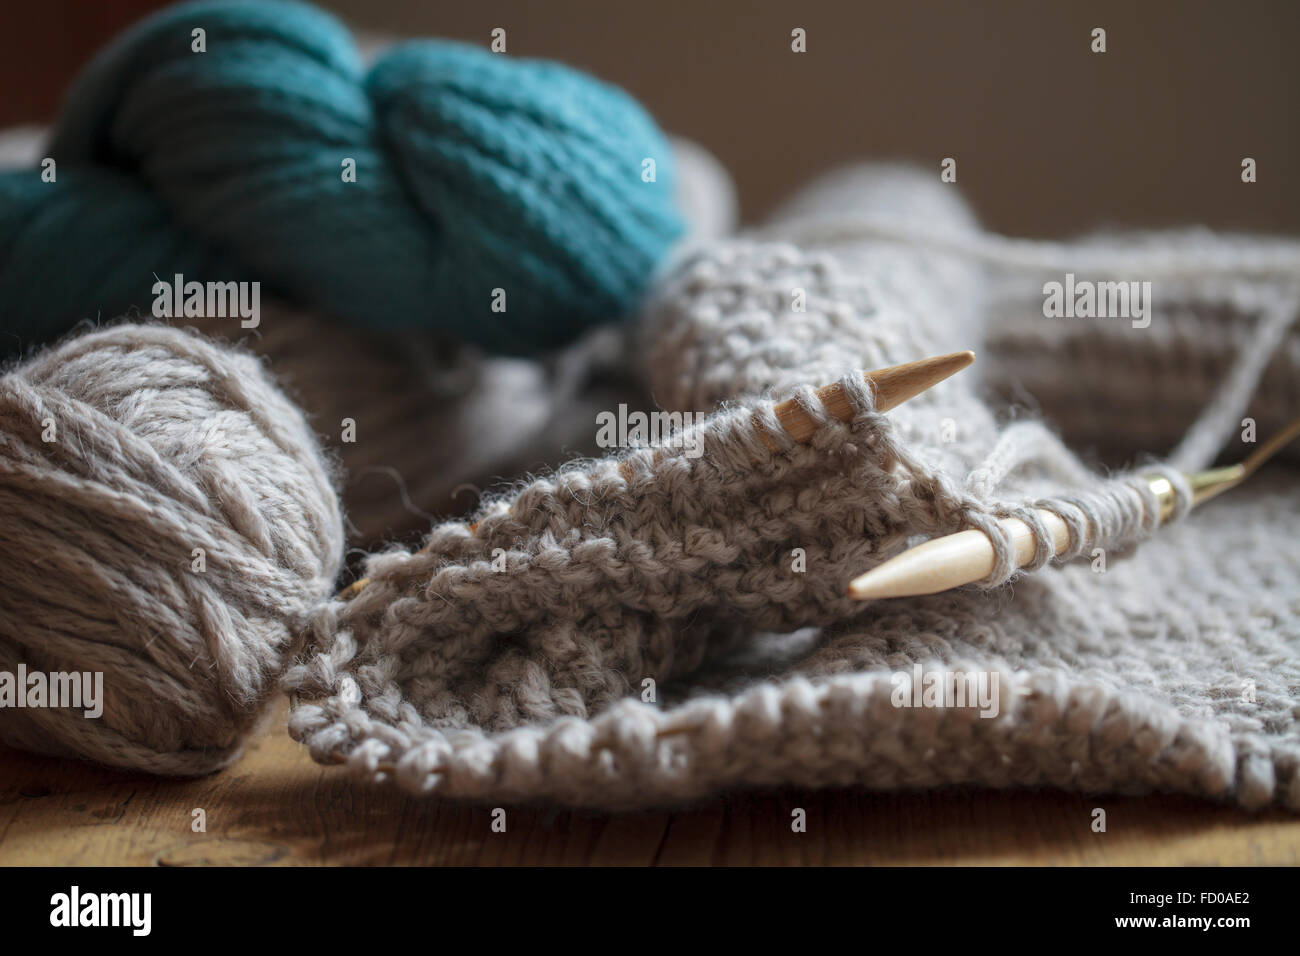 Knitting needles and wool Stock Photo